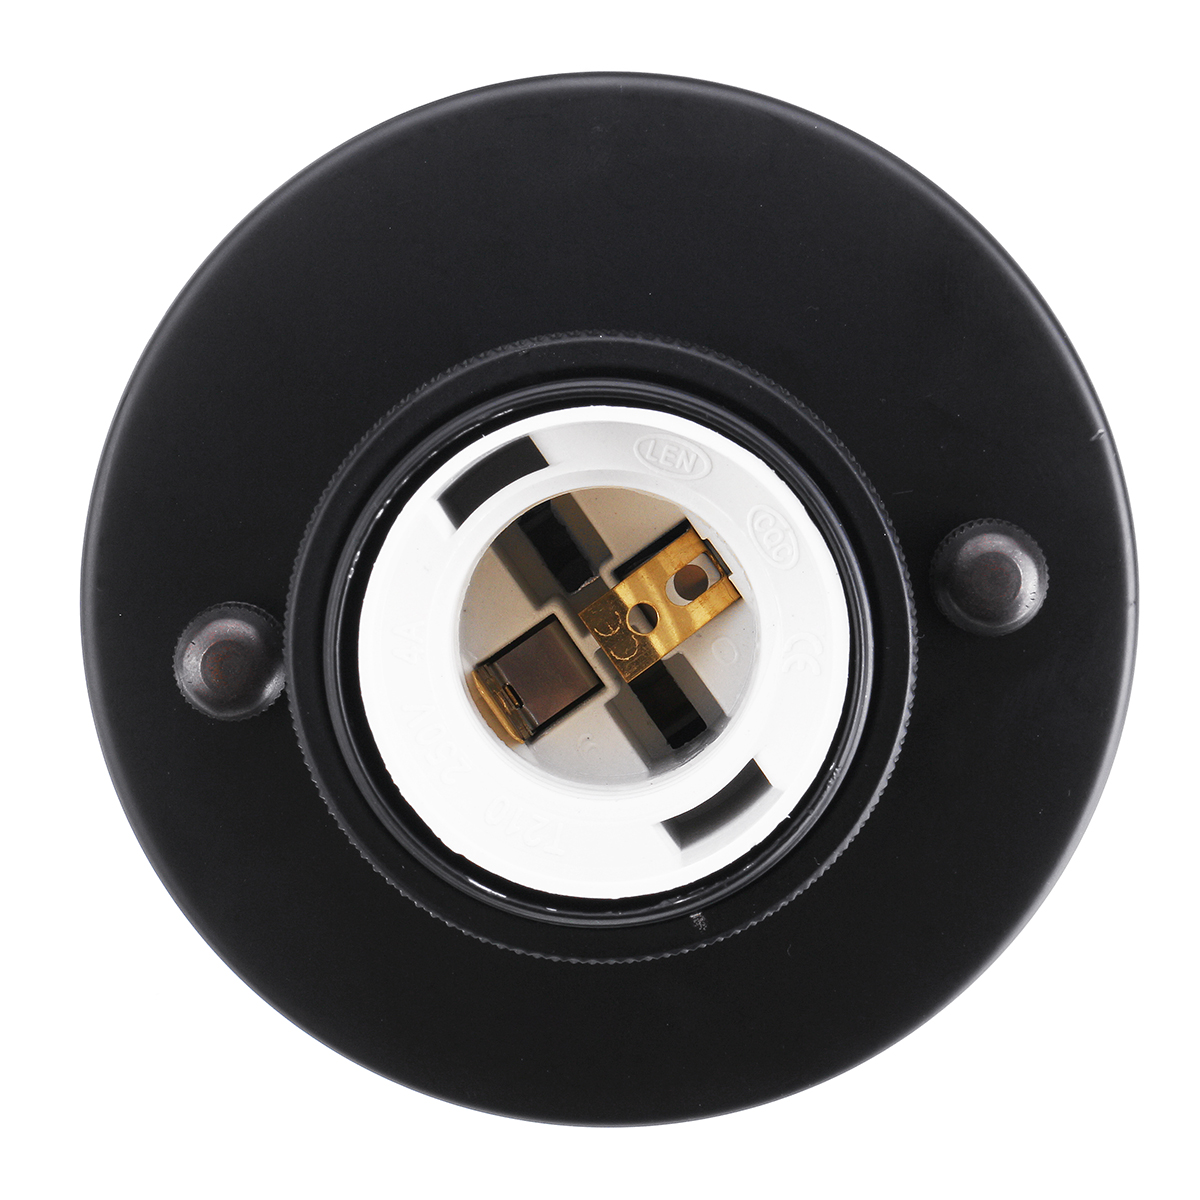 E27-Industrial-Vintage-Bulb-Adapter-Wall-Ceiling-Pendant-Light-Socket-Holder-Lamp-Screw-AC110-220V-1567766-3